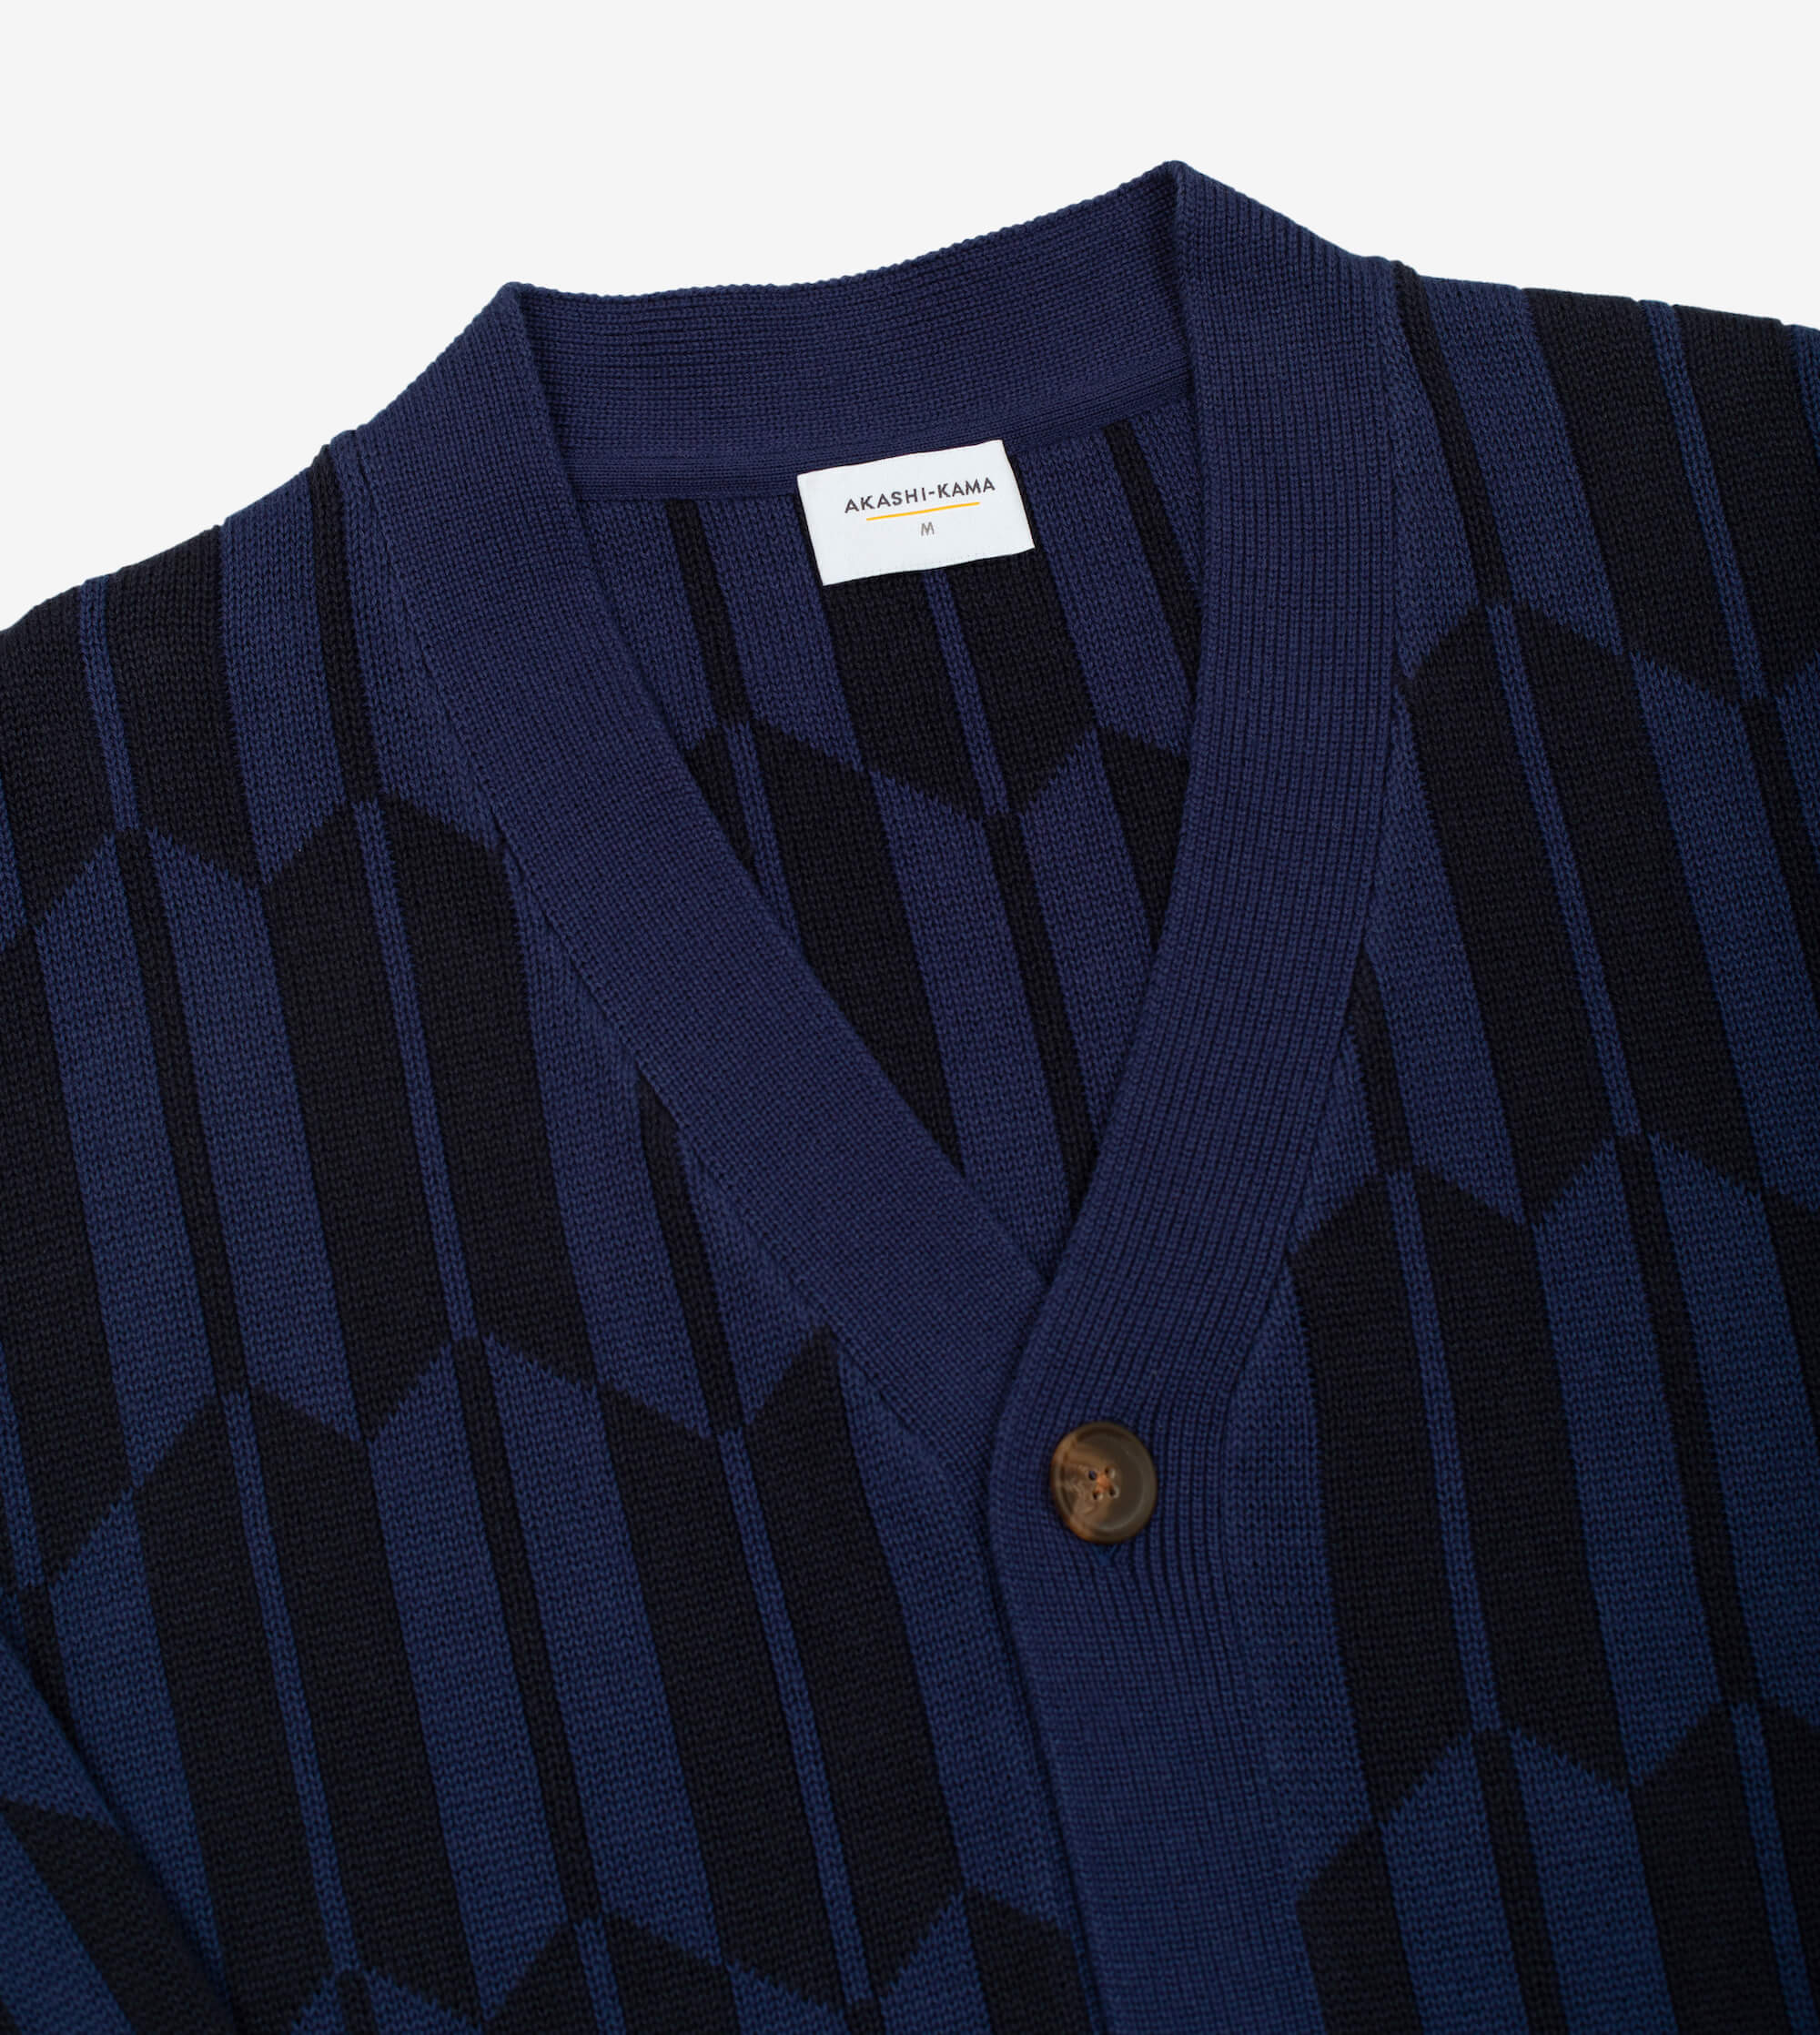  Arrow Japanese Pattern Cardigan Indigo Sweater  |  AKASHI-KAMA Knitwear